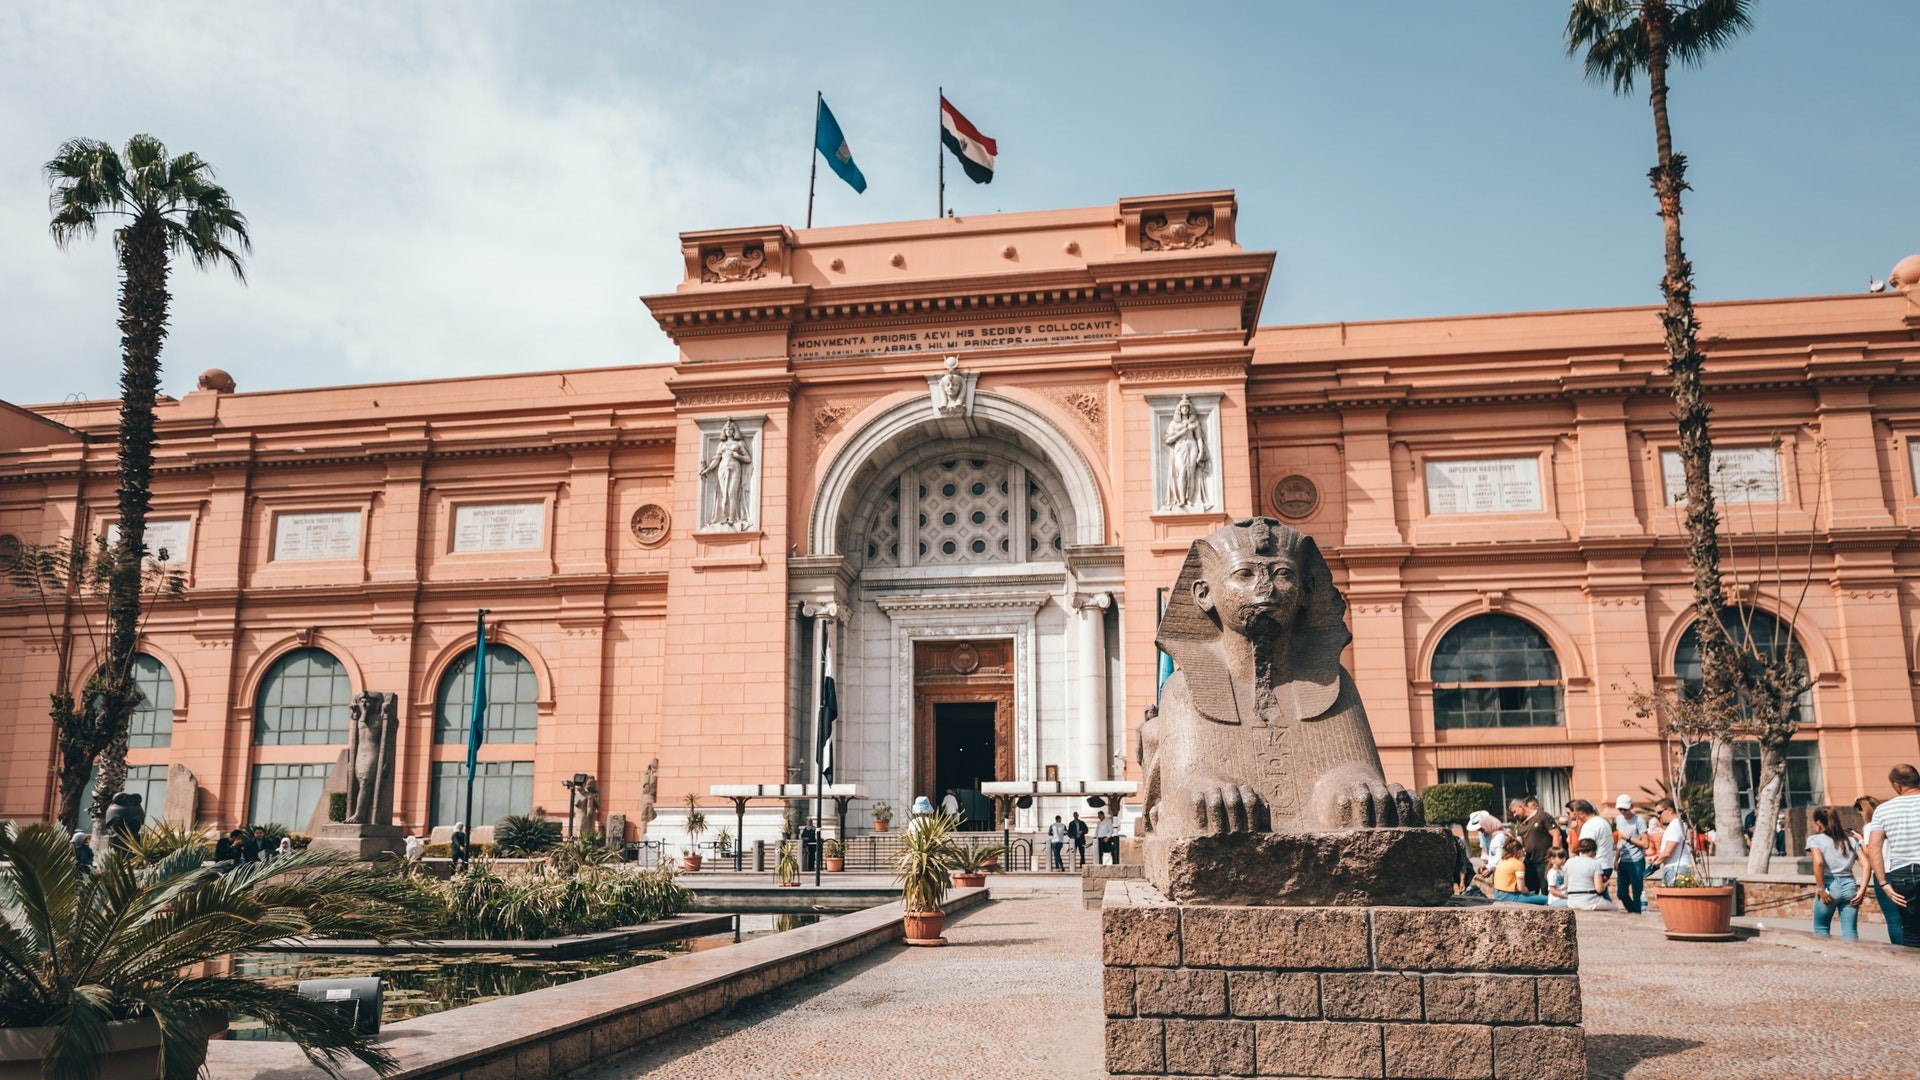 The Egyptian Museum, Citadel, and Khan el-Khalili